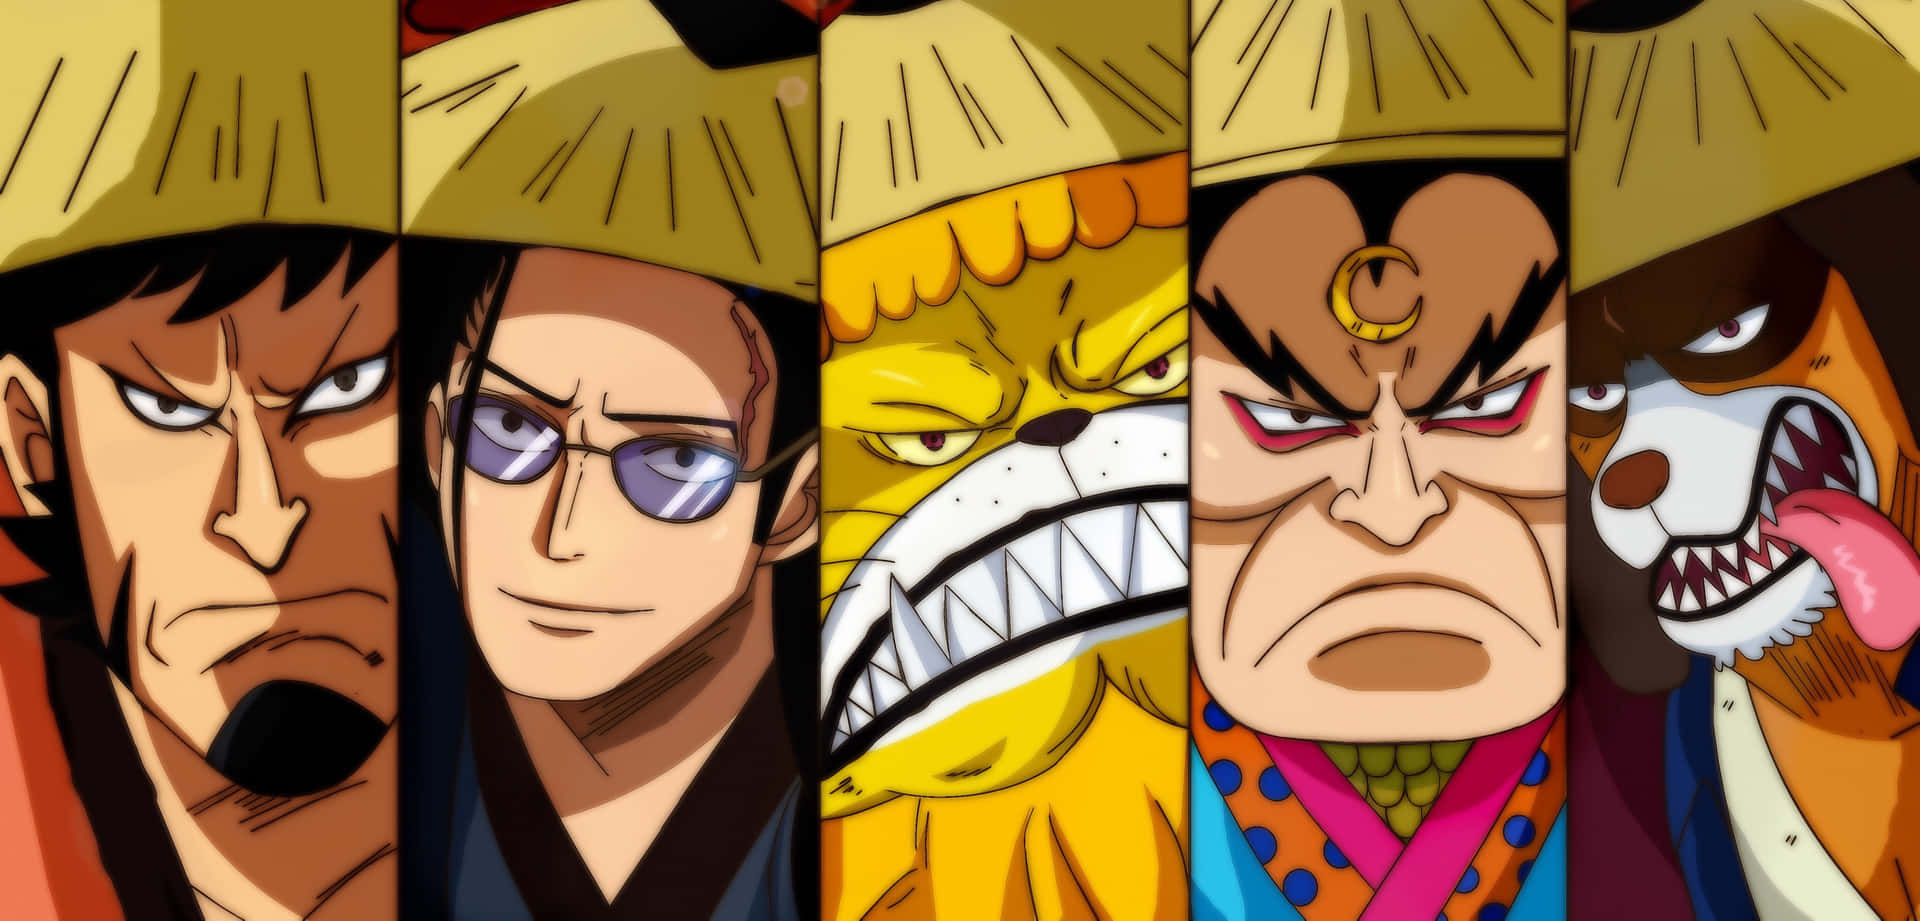 Enhøjtopløsningsbaggrund Med Den Populære Animeserie: One Piece